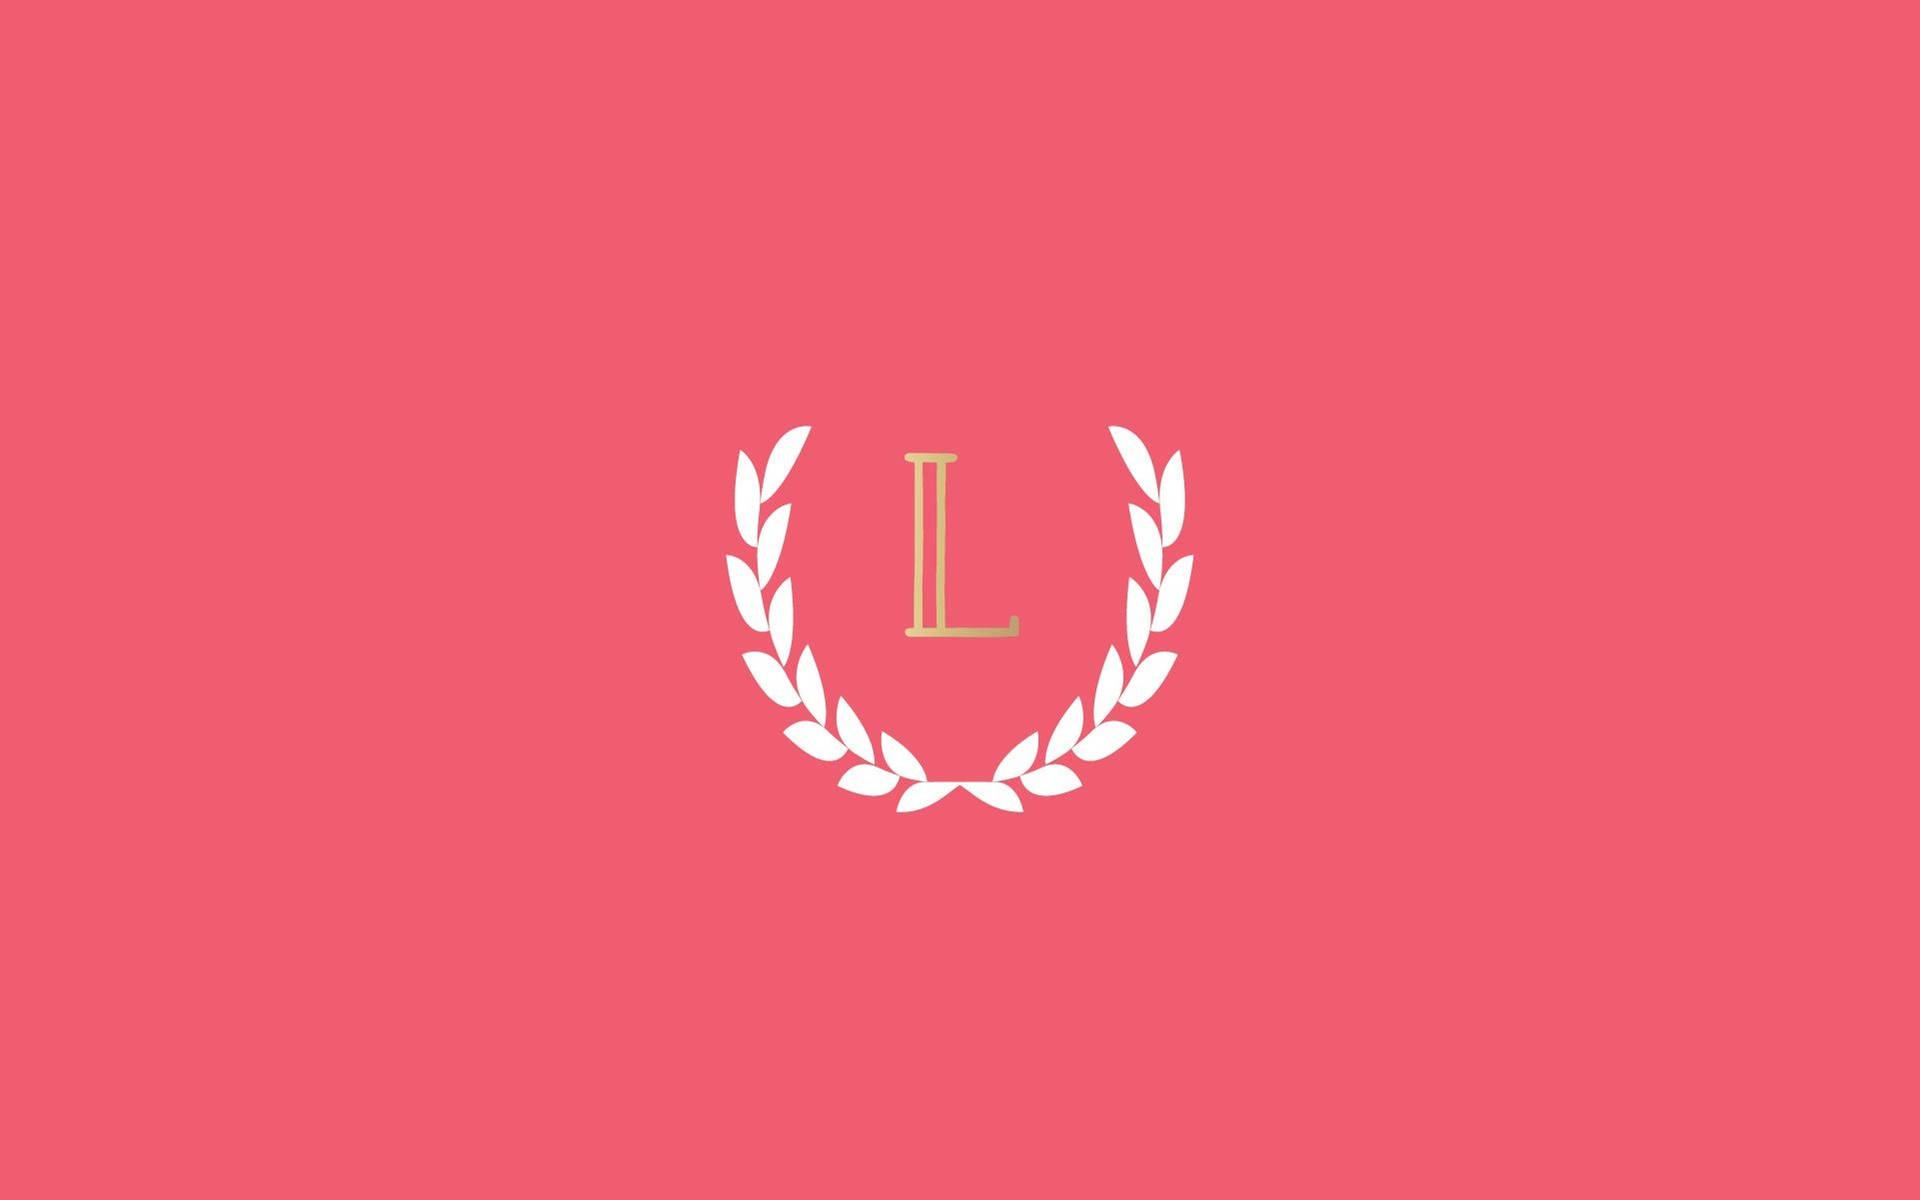 Minimalist Gold Letter L On Pink Background